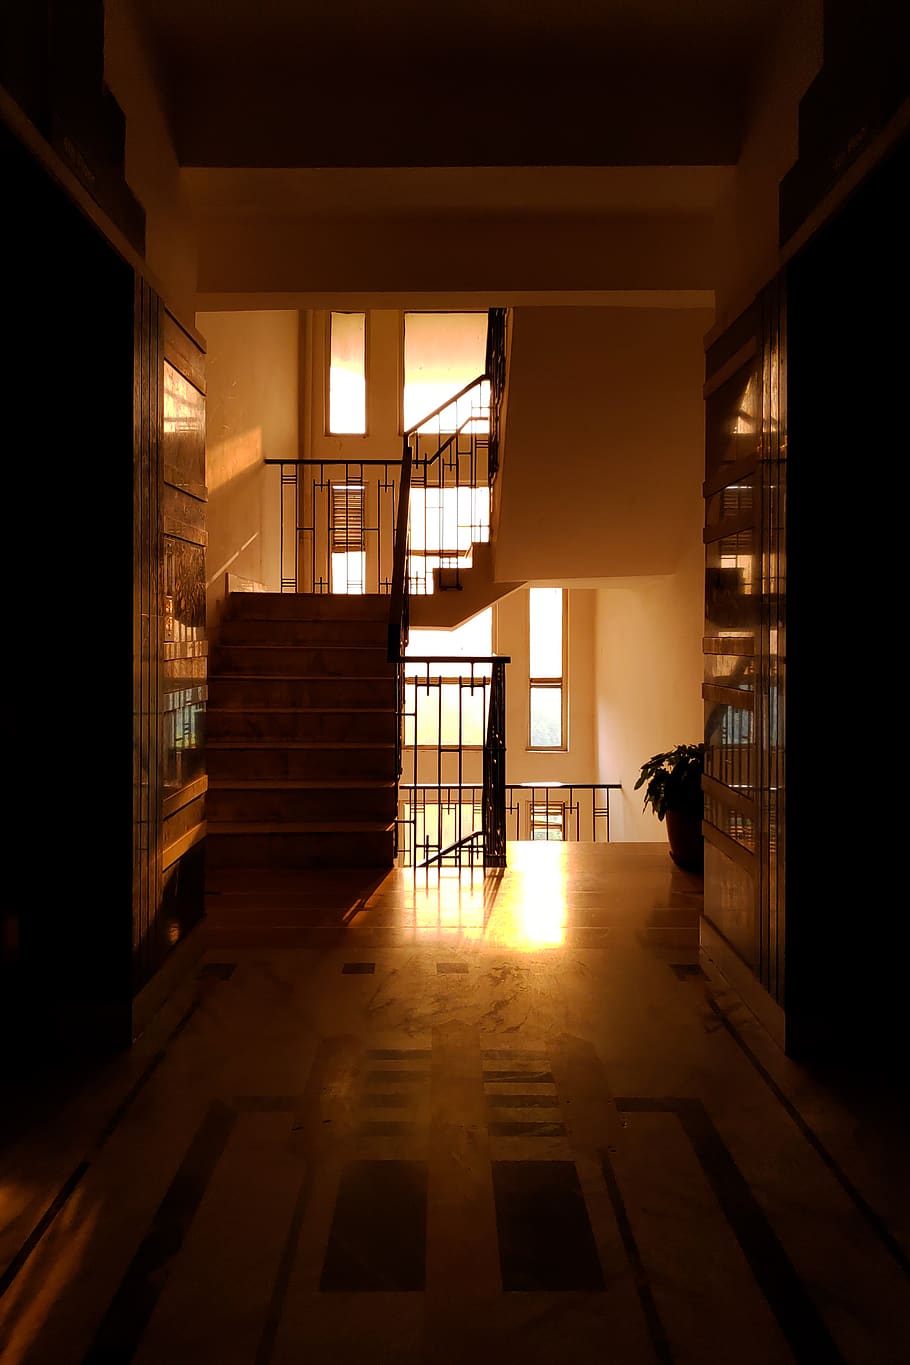 Interior Design Of A Building, architecture, backlit, city, dark